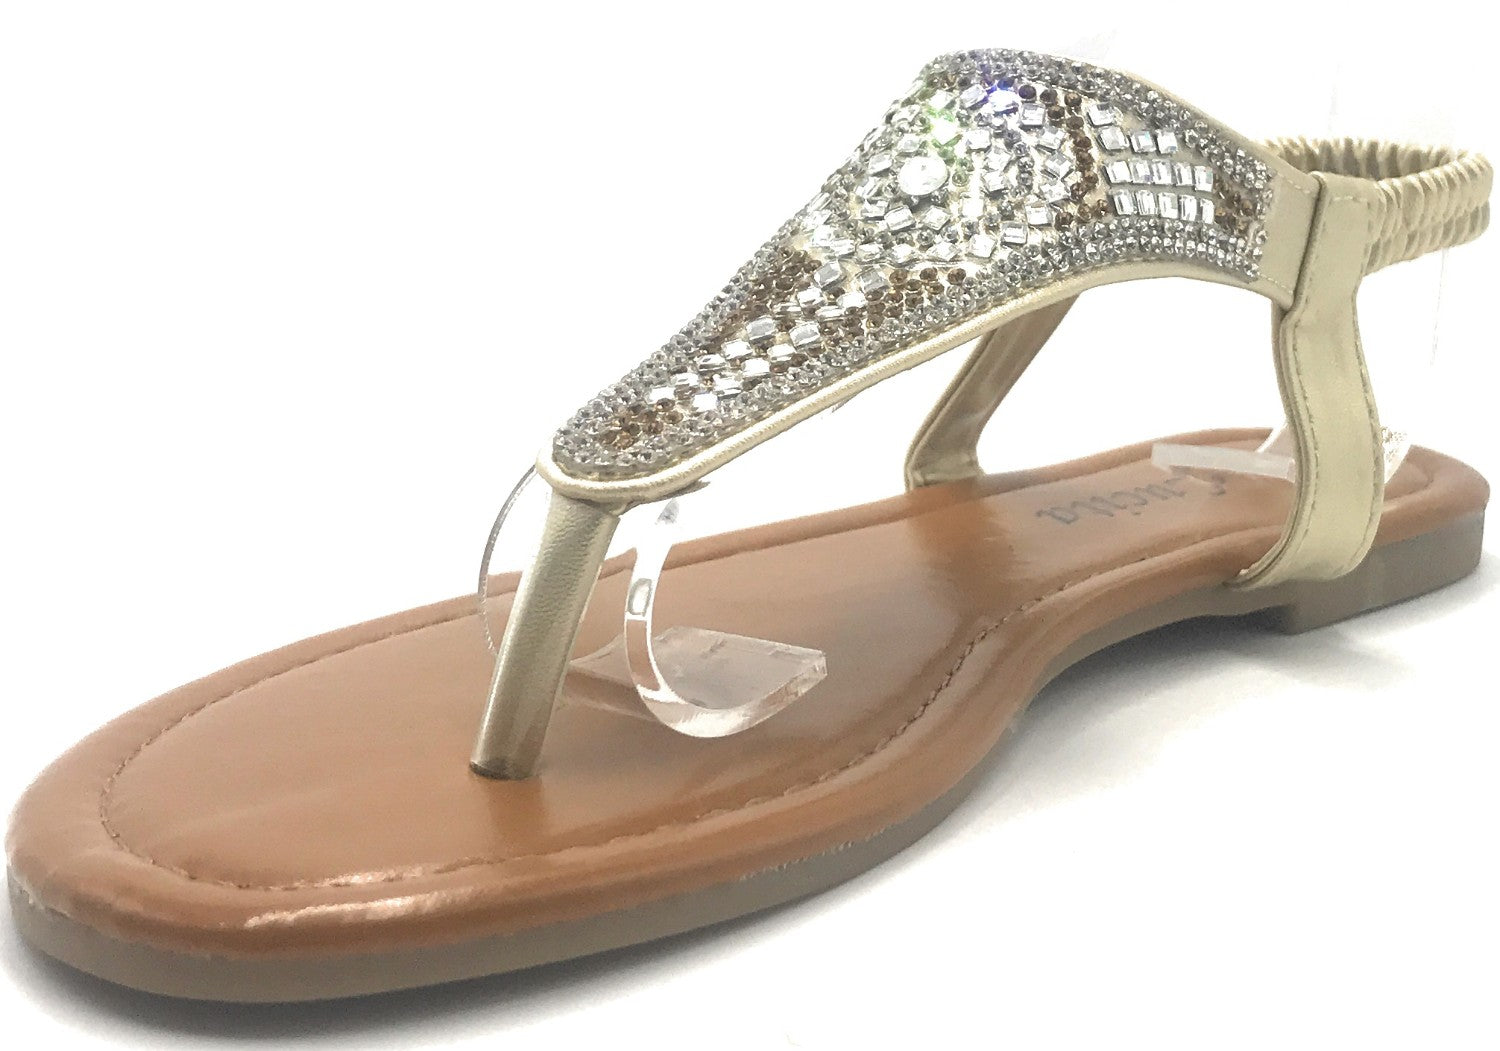 Lucita PPP-001 Women's Flat Summer Sandals Comfortable New Style ...